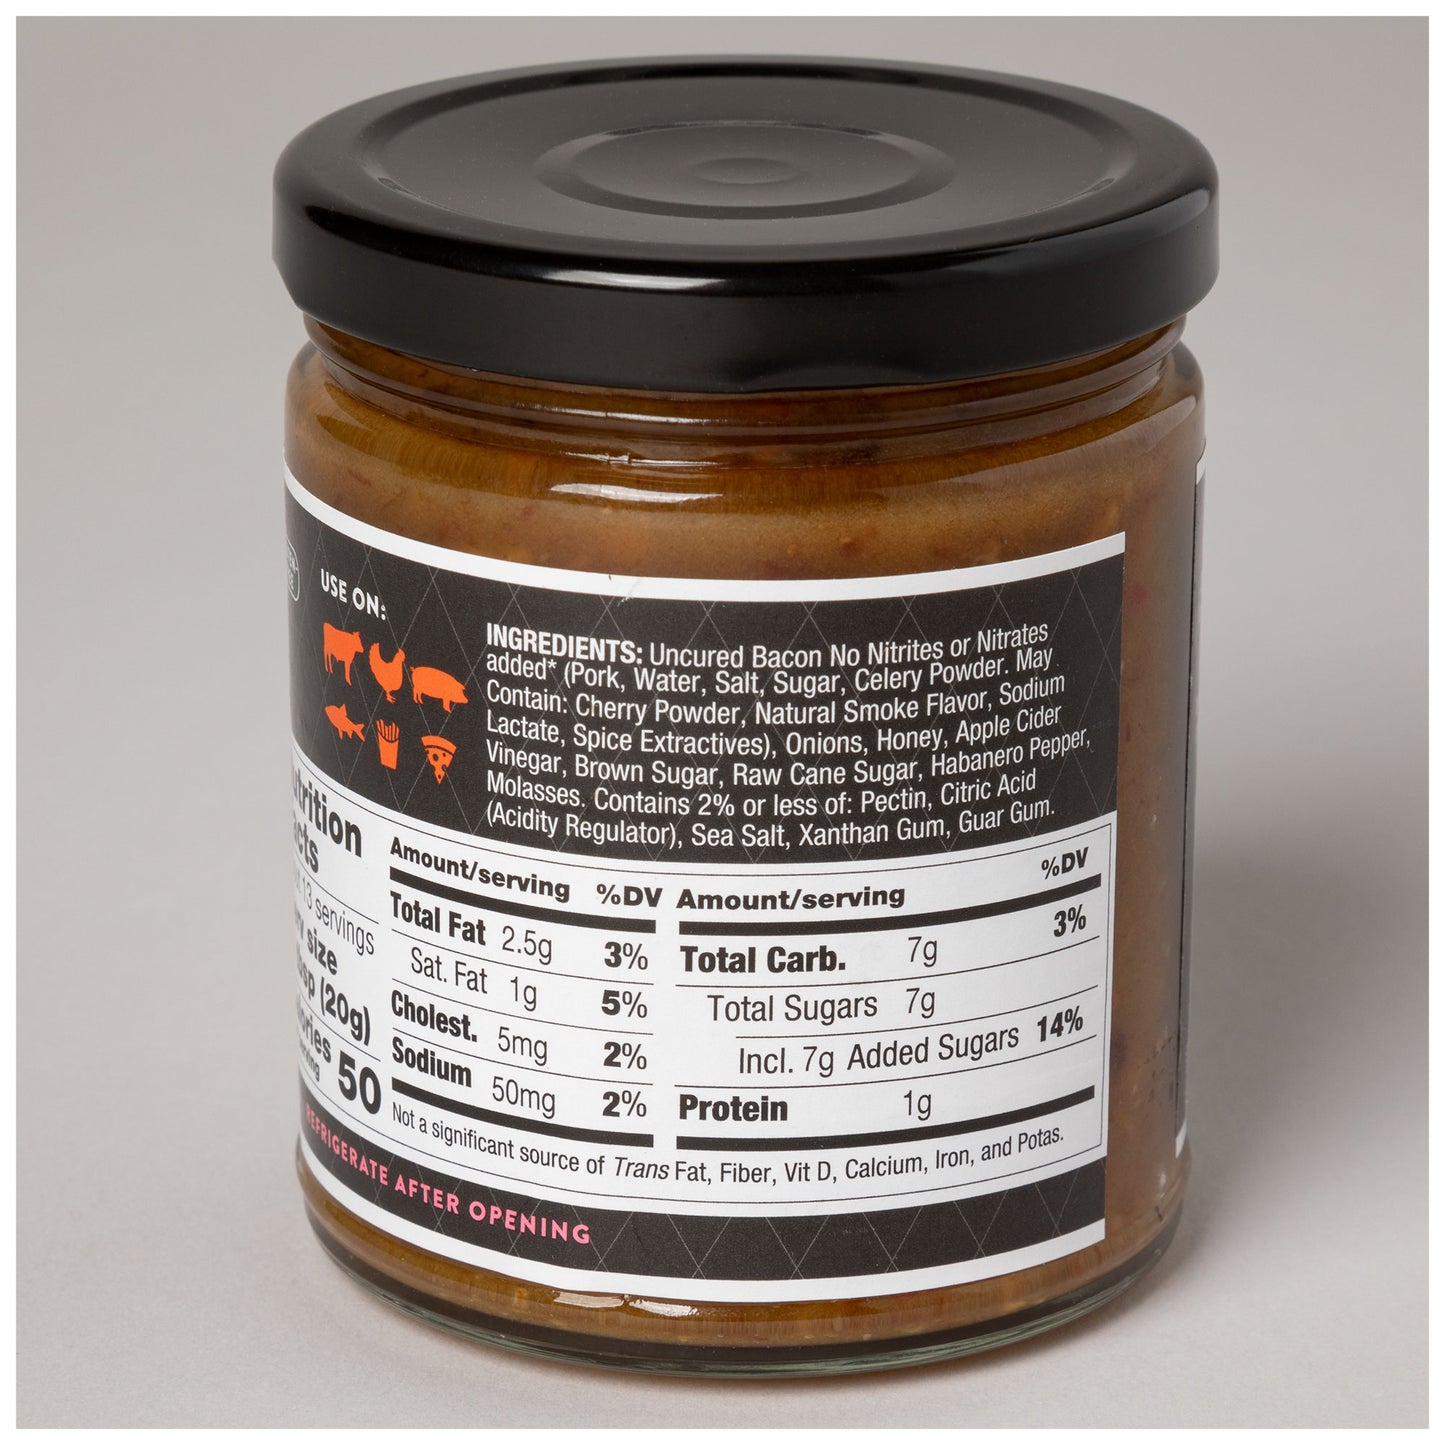 TBJ Gourmet&trade; Honey Habanero Uncured Bacon Jam